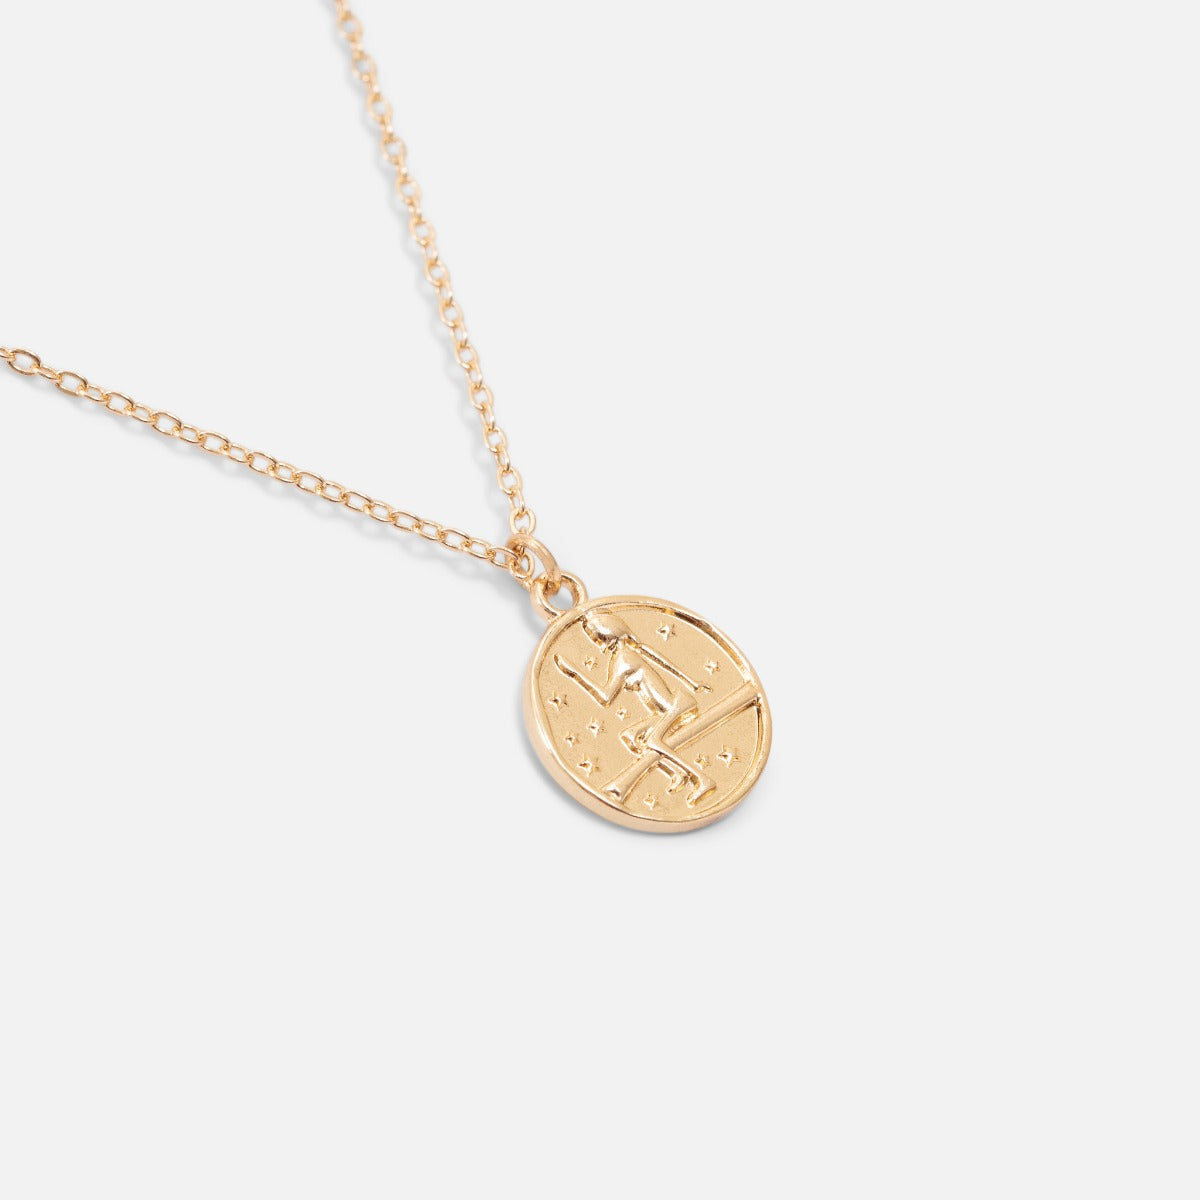 Golden pendant astrological sign "virgo"